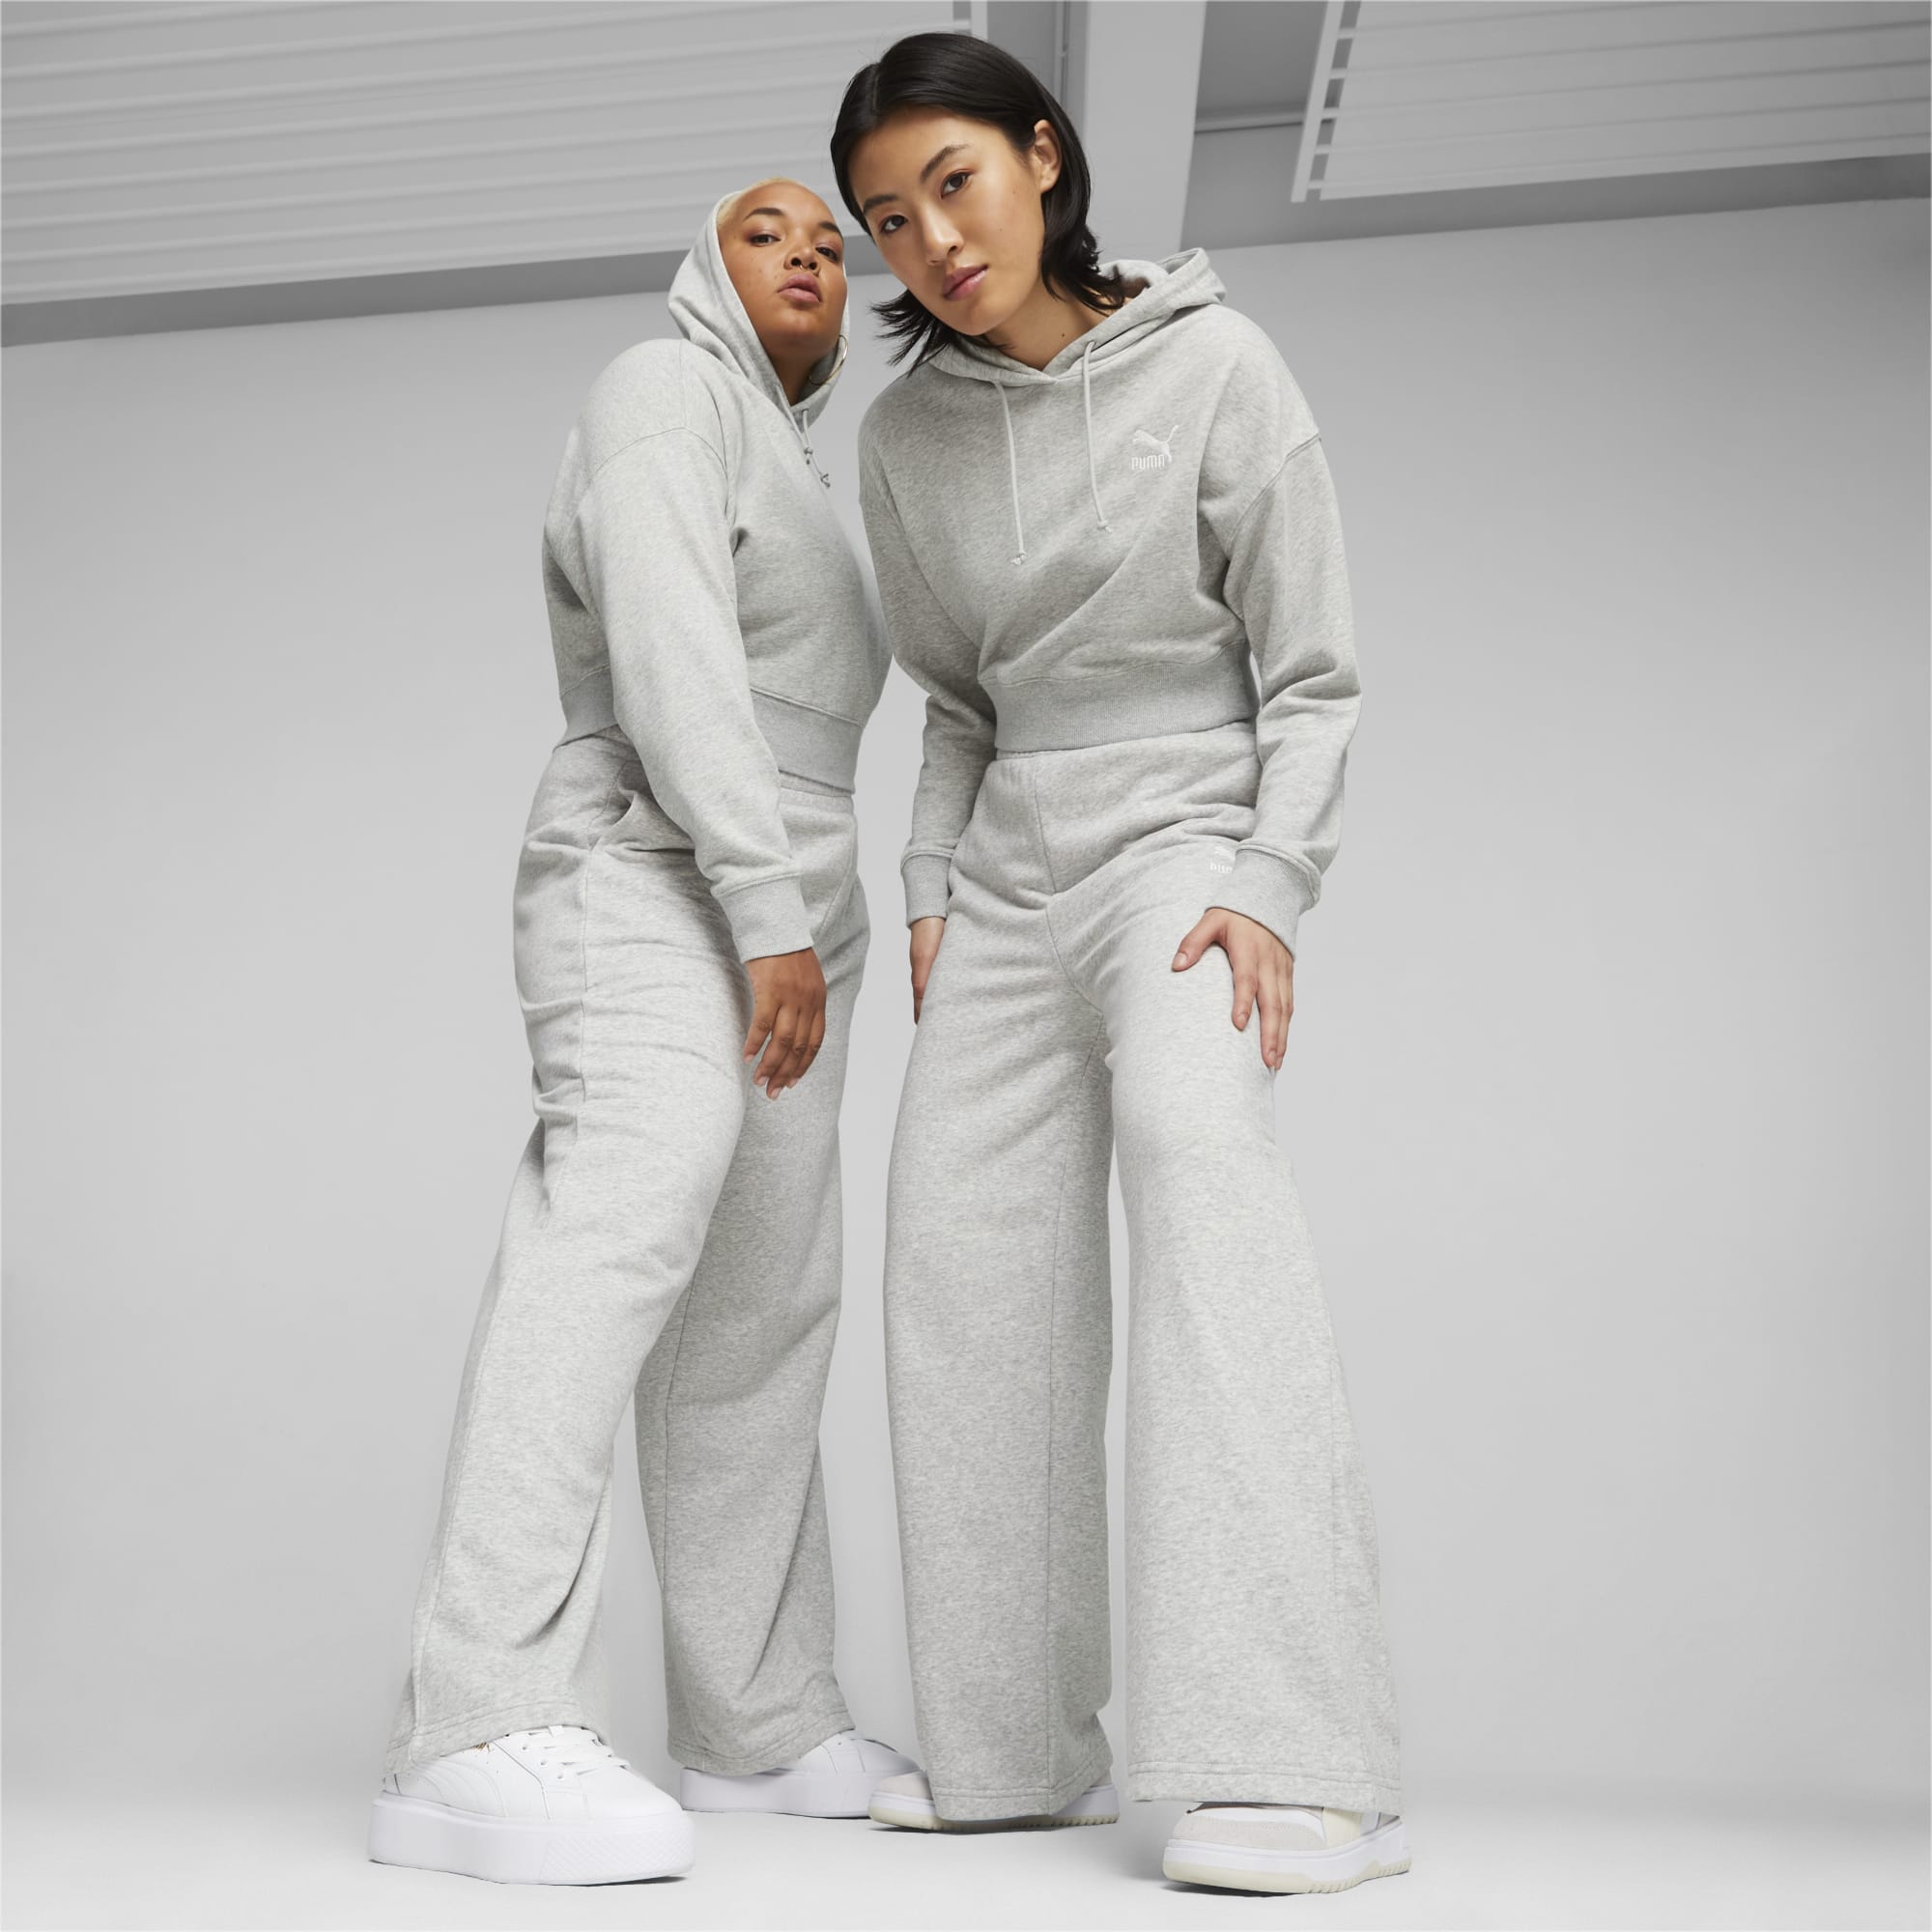 PUMA Classics Women's Relaxed Sweatpants, Light Grey Heather, Size XS, Clothing